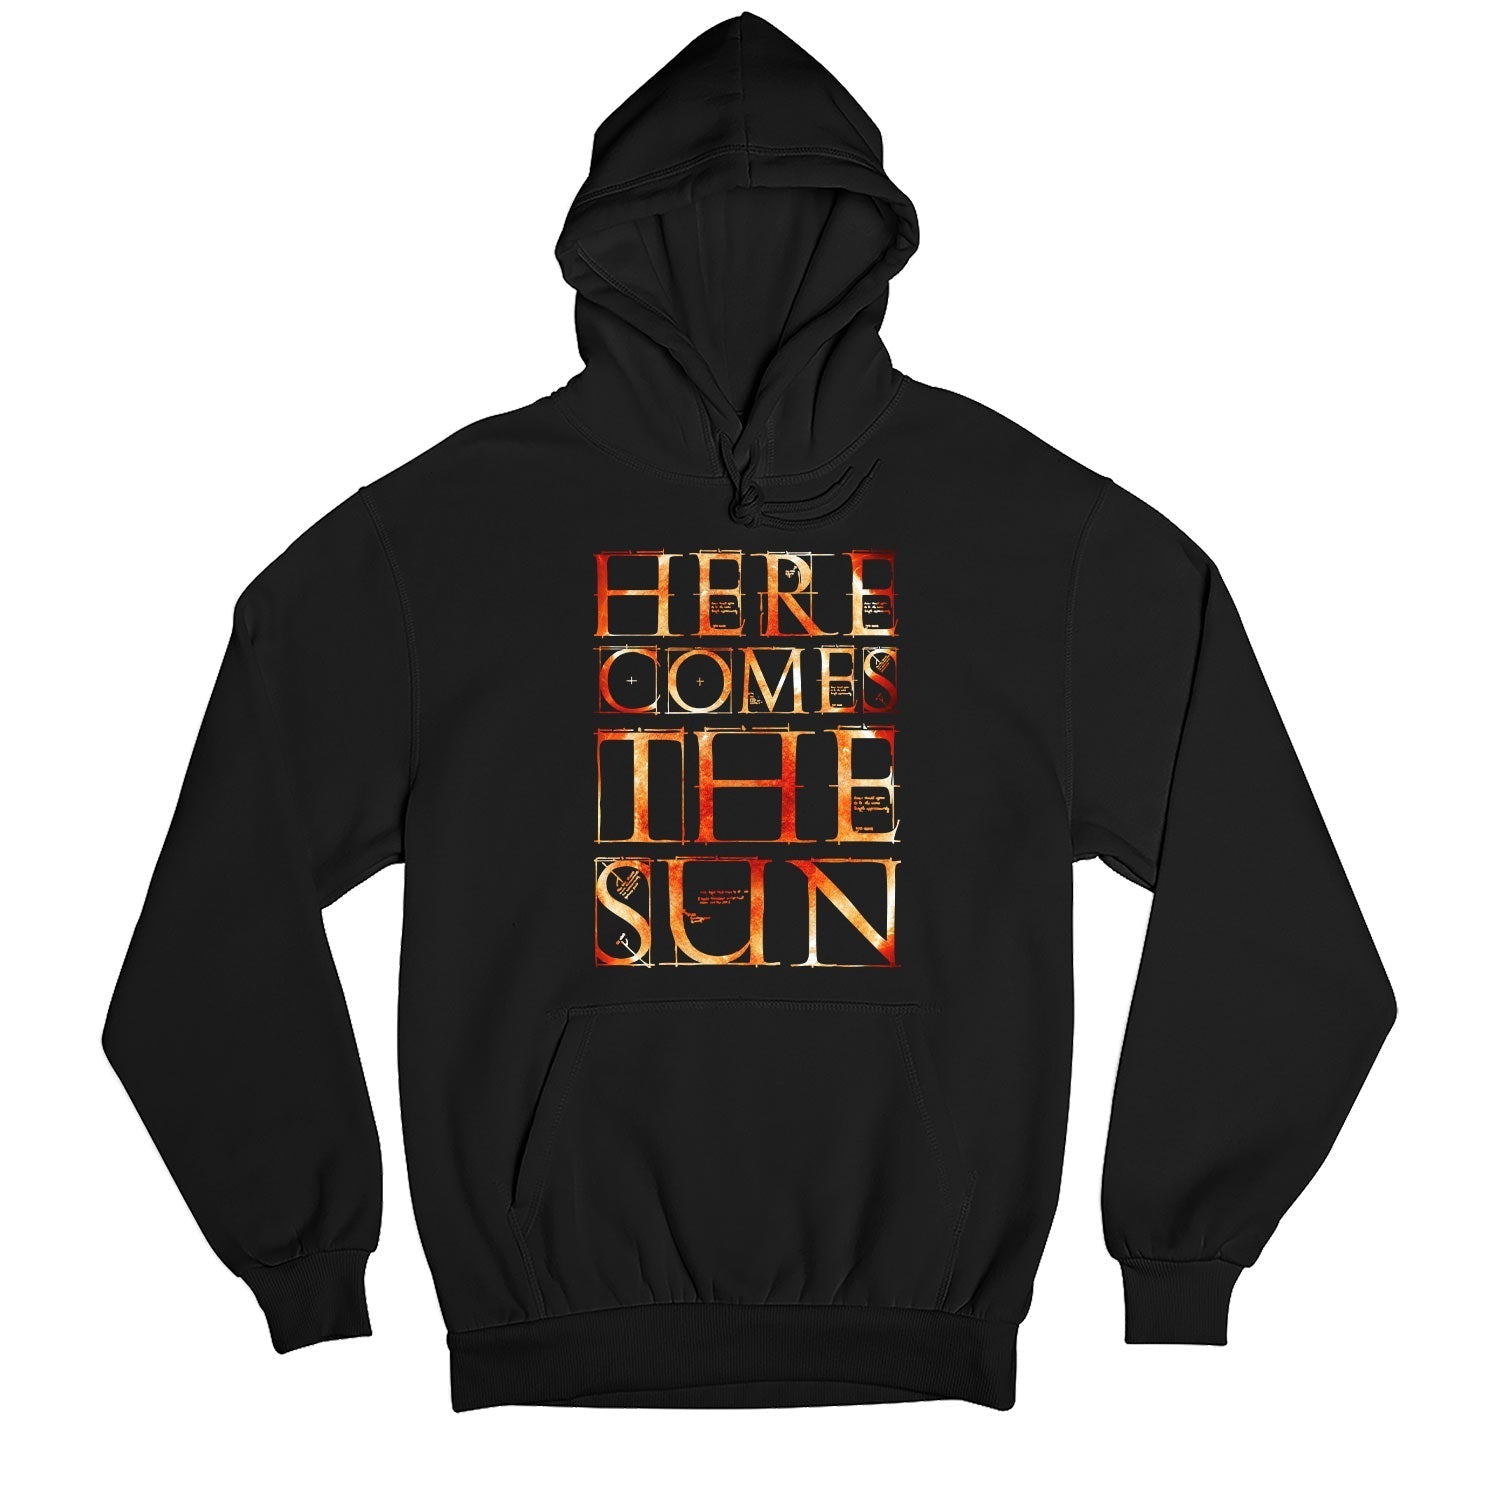 The Beatles Hoodie - Here Comes The Sun Hooded Sweatshirt The Banyan Tee TBT